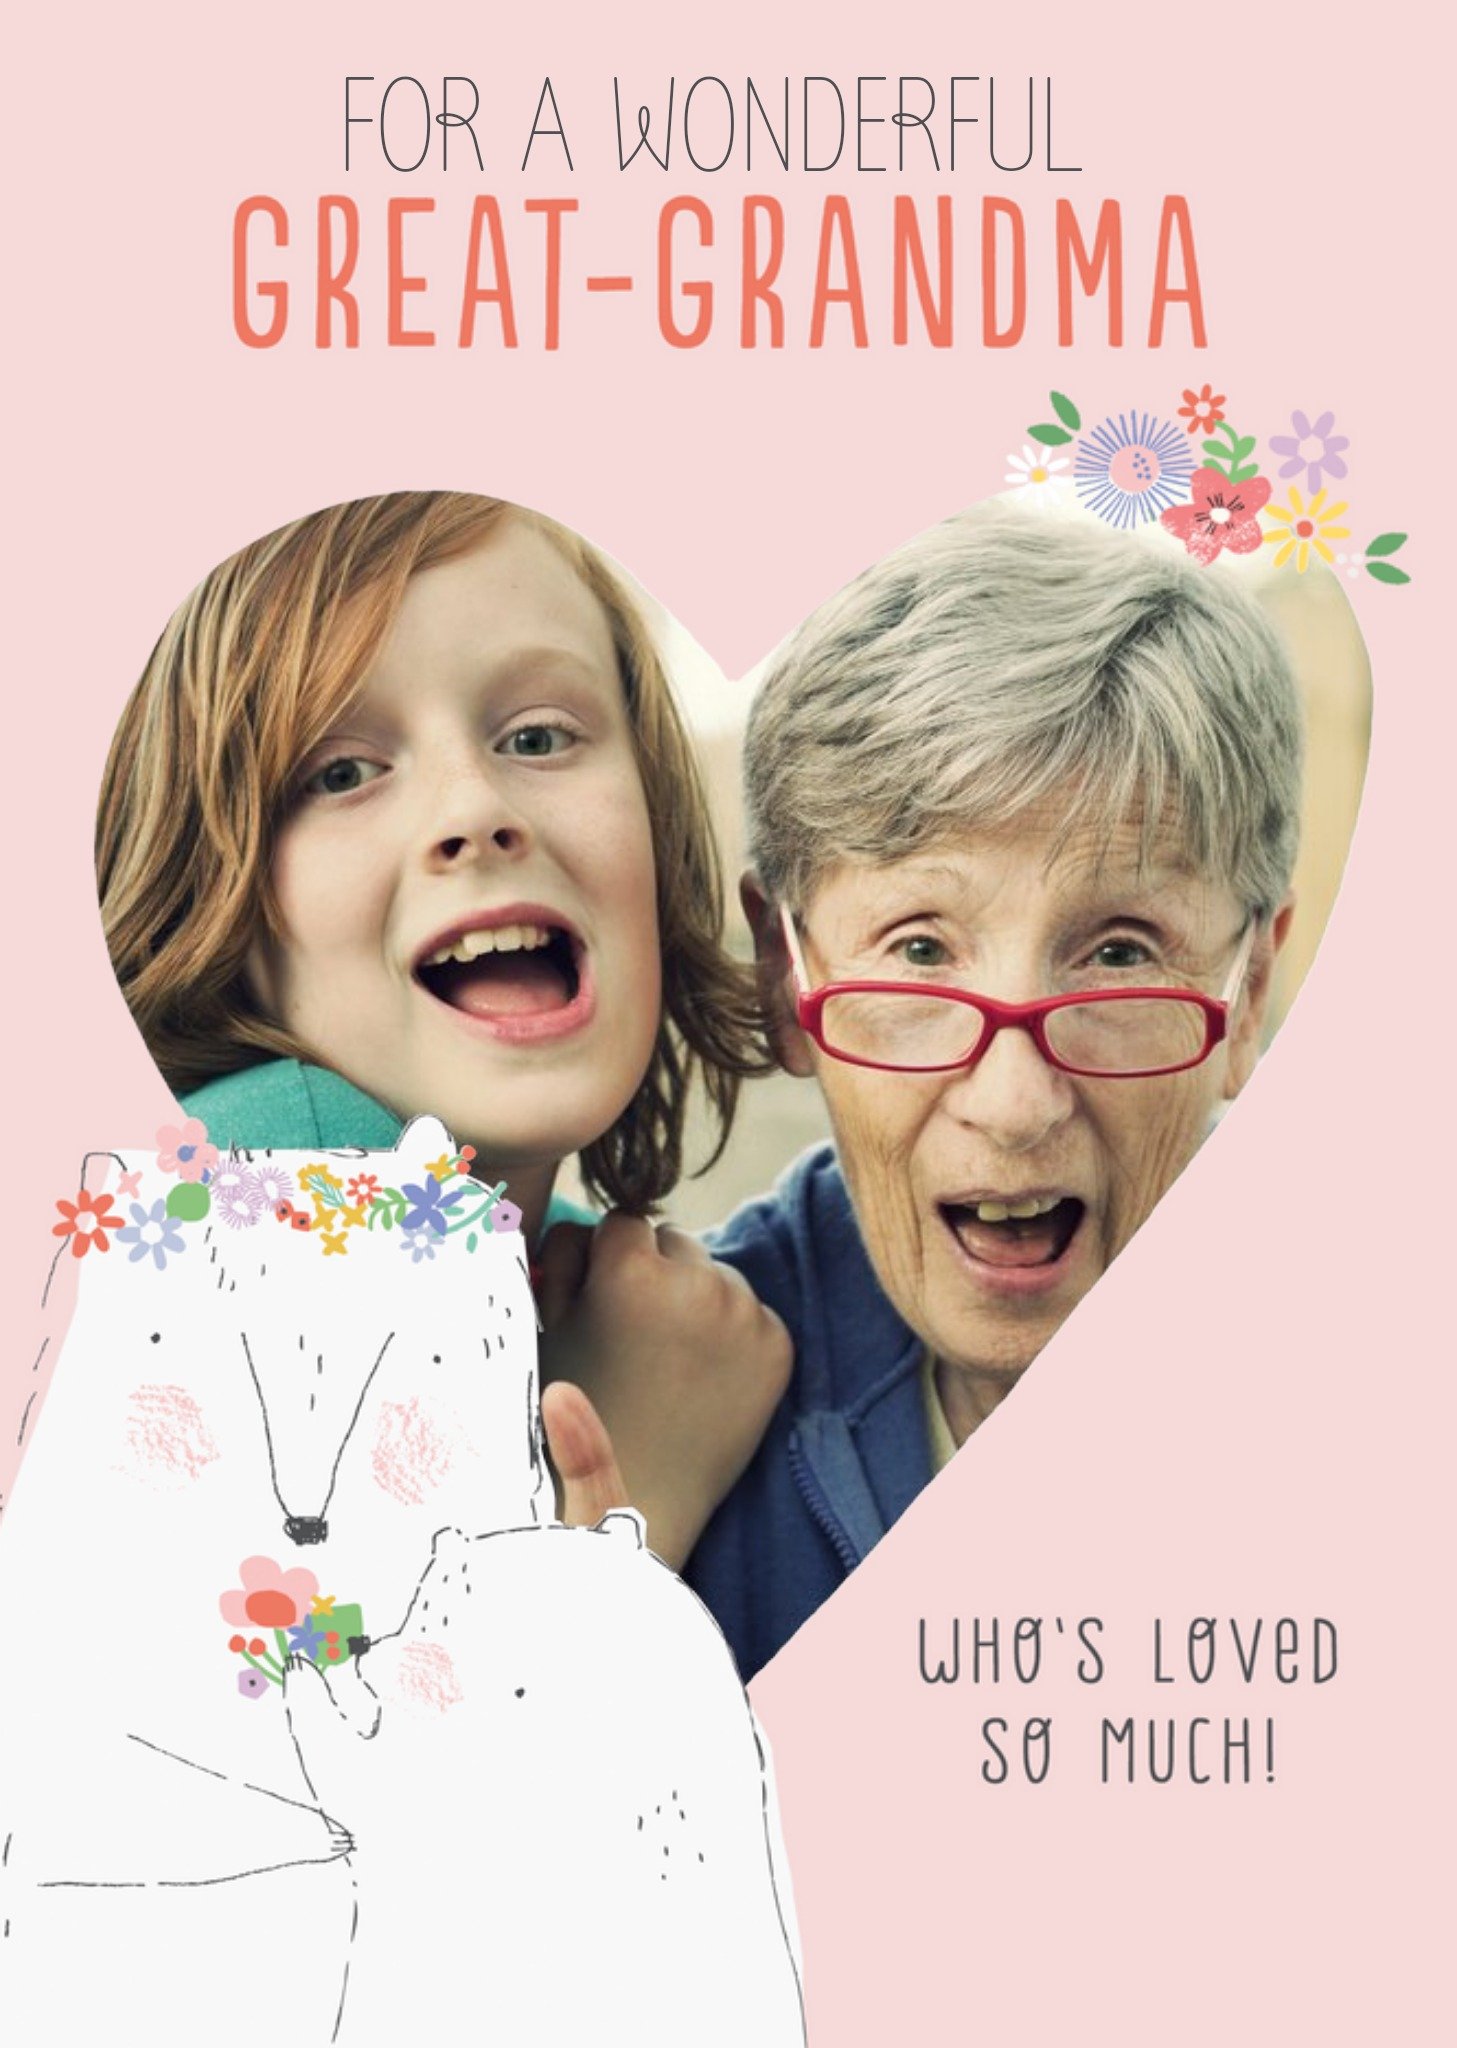 Moonpig Cute Heart Shaped Photo Upload Illustrative Bears Great-Grandma Birthday Card Ecard